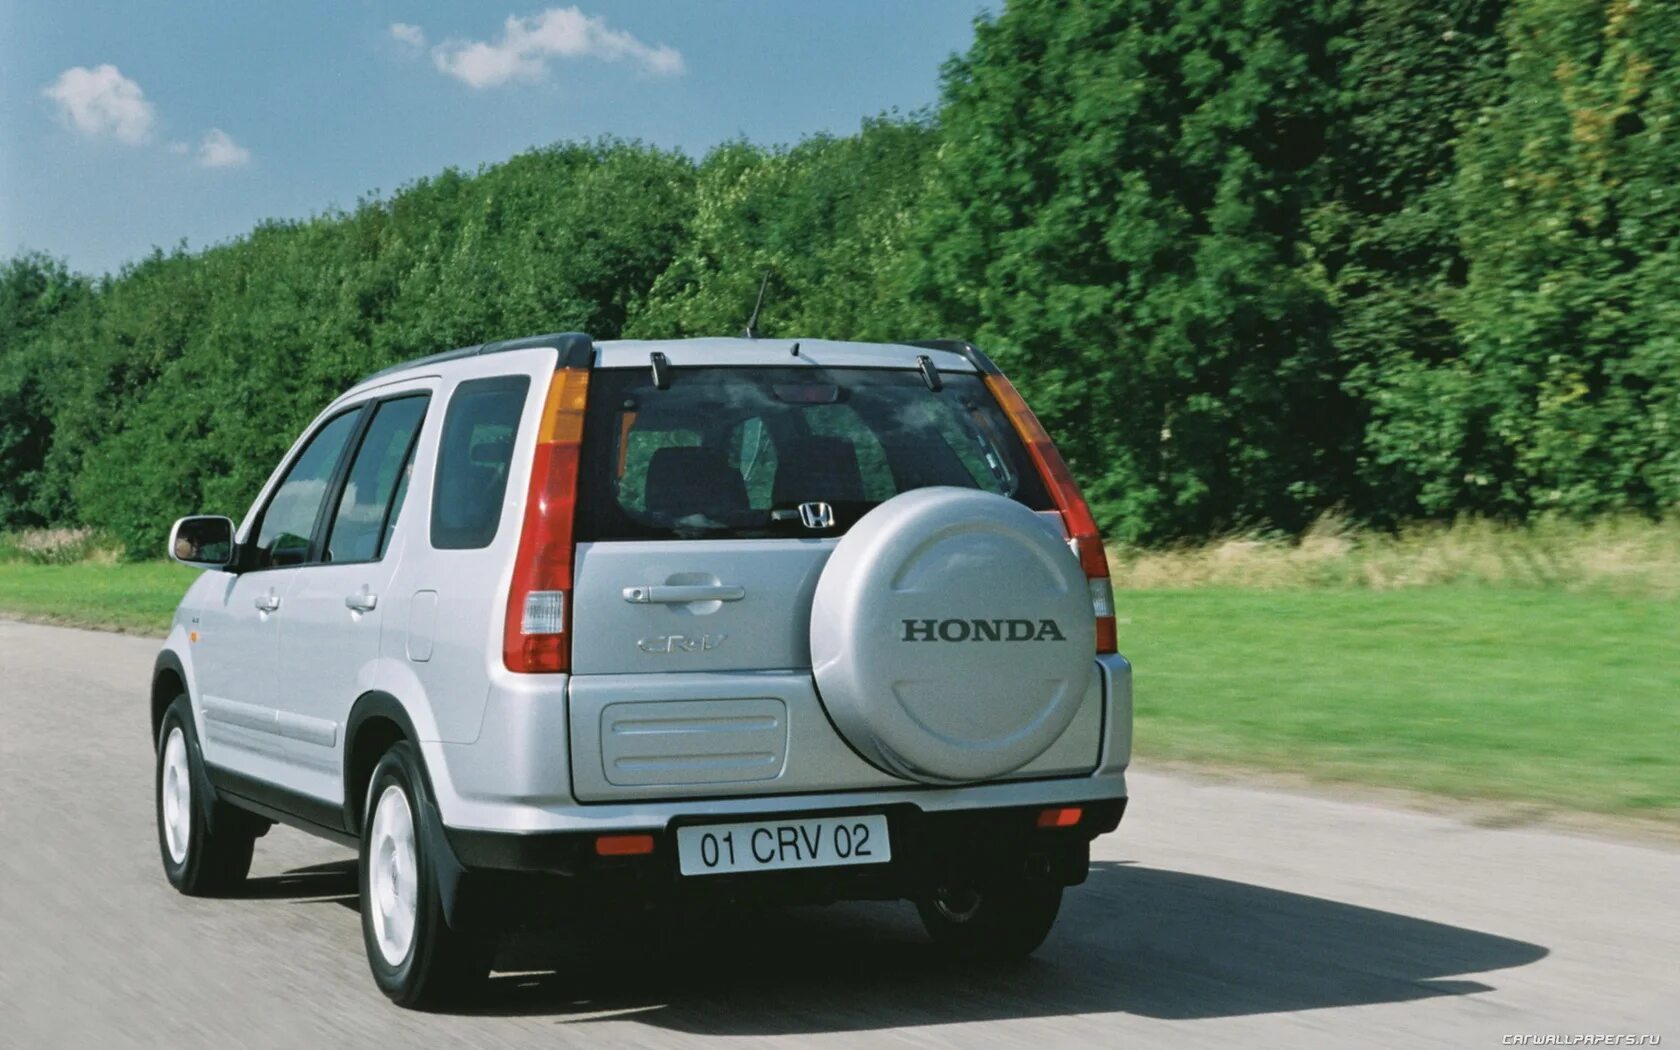 Honda cr v 2004. Honda CR-V 2002-2006. Honda CR-V 2 2002. Honda CR-V 2001. Honda CR-V 2 2006.